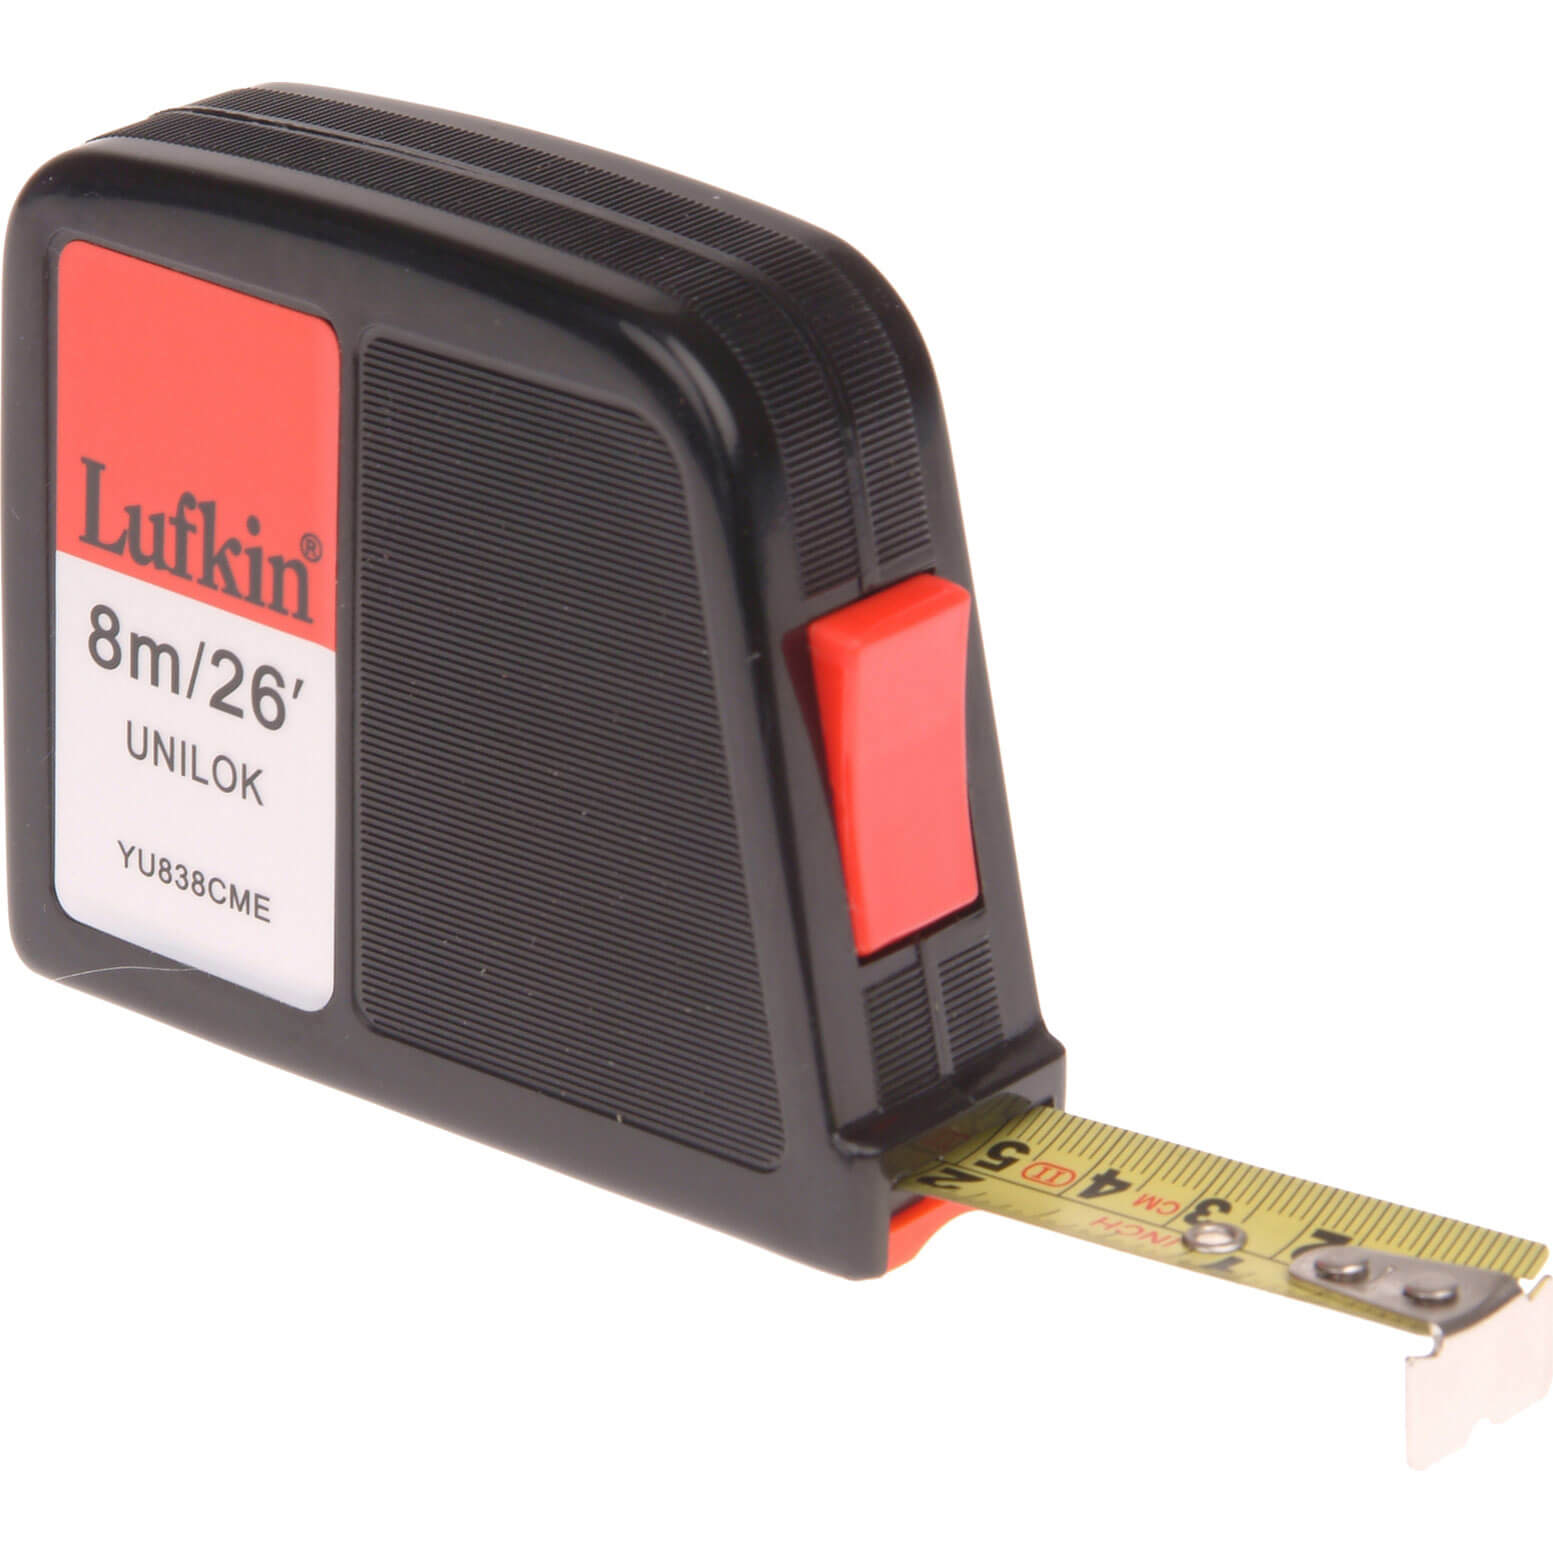 Image of Lufkin Unilok Tape Measure Imperial & Metric 26ft / 8m 19mm